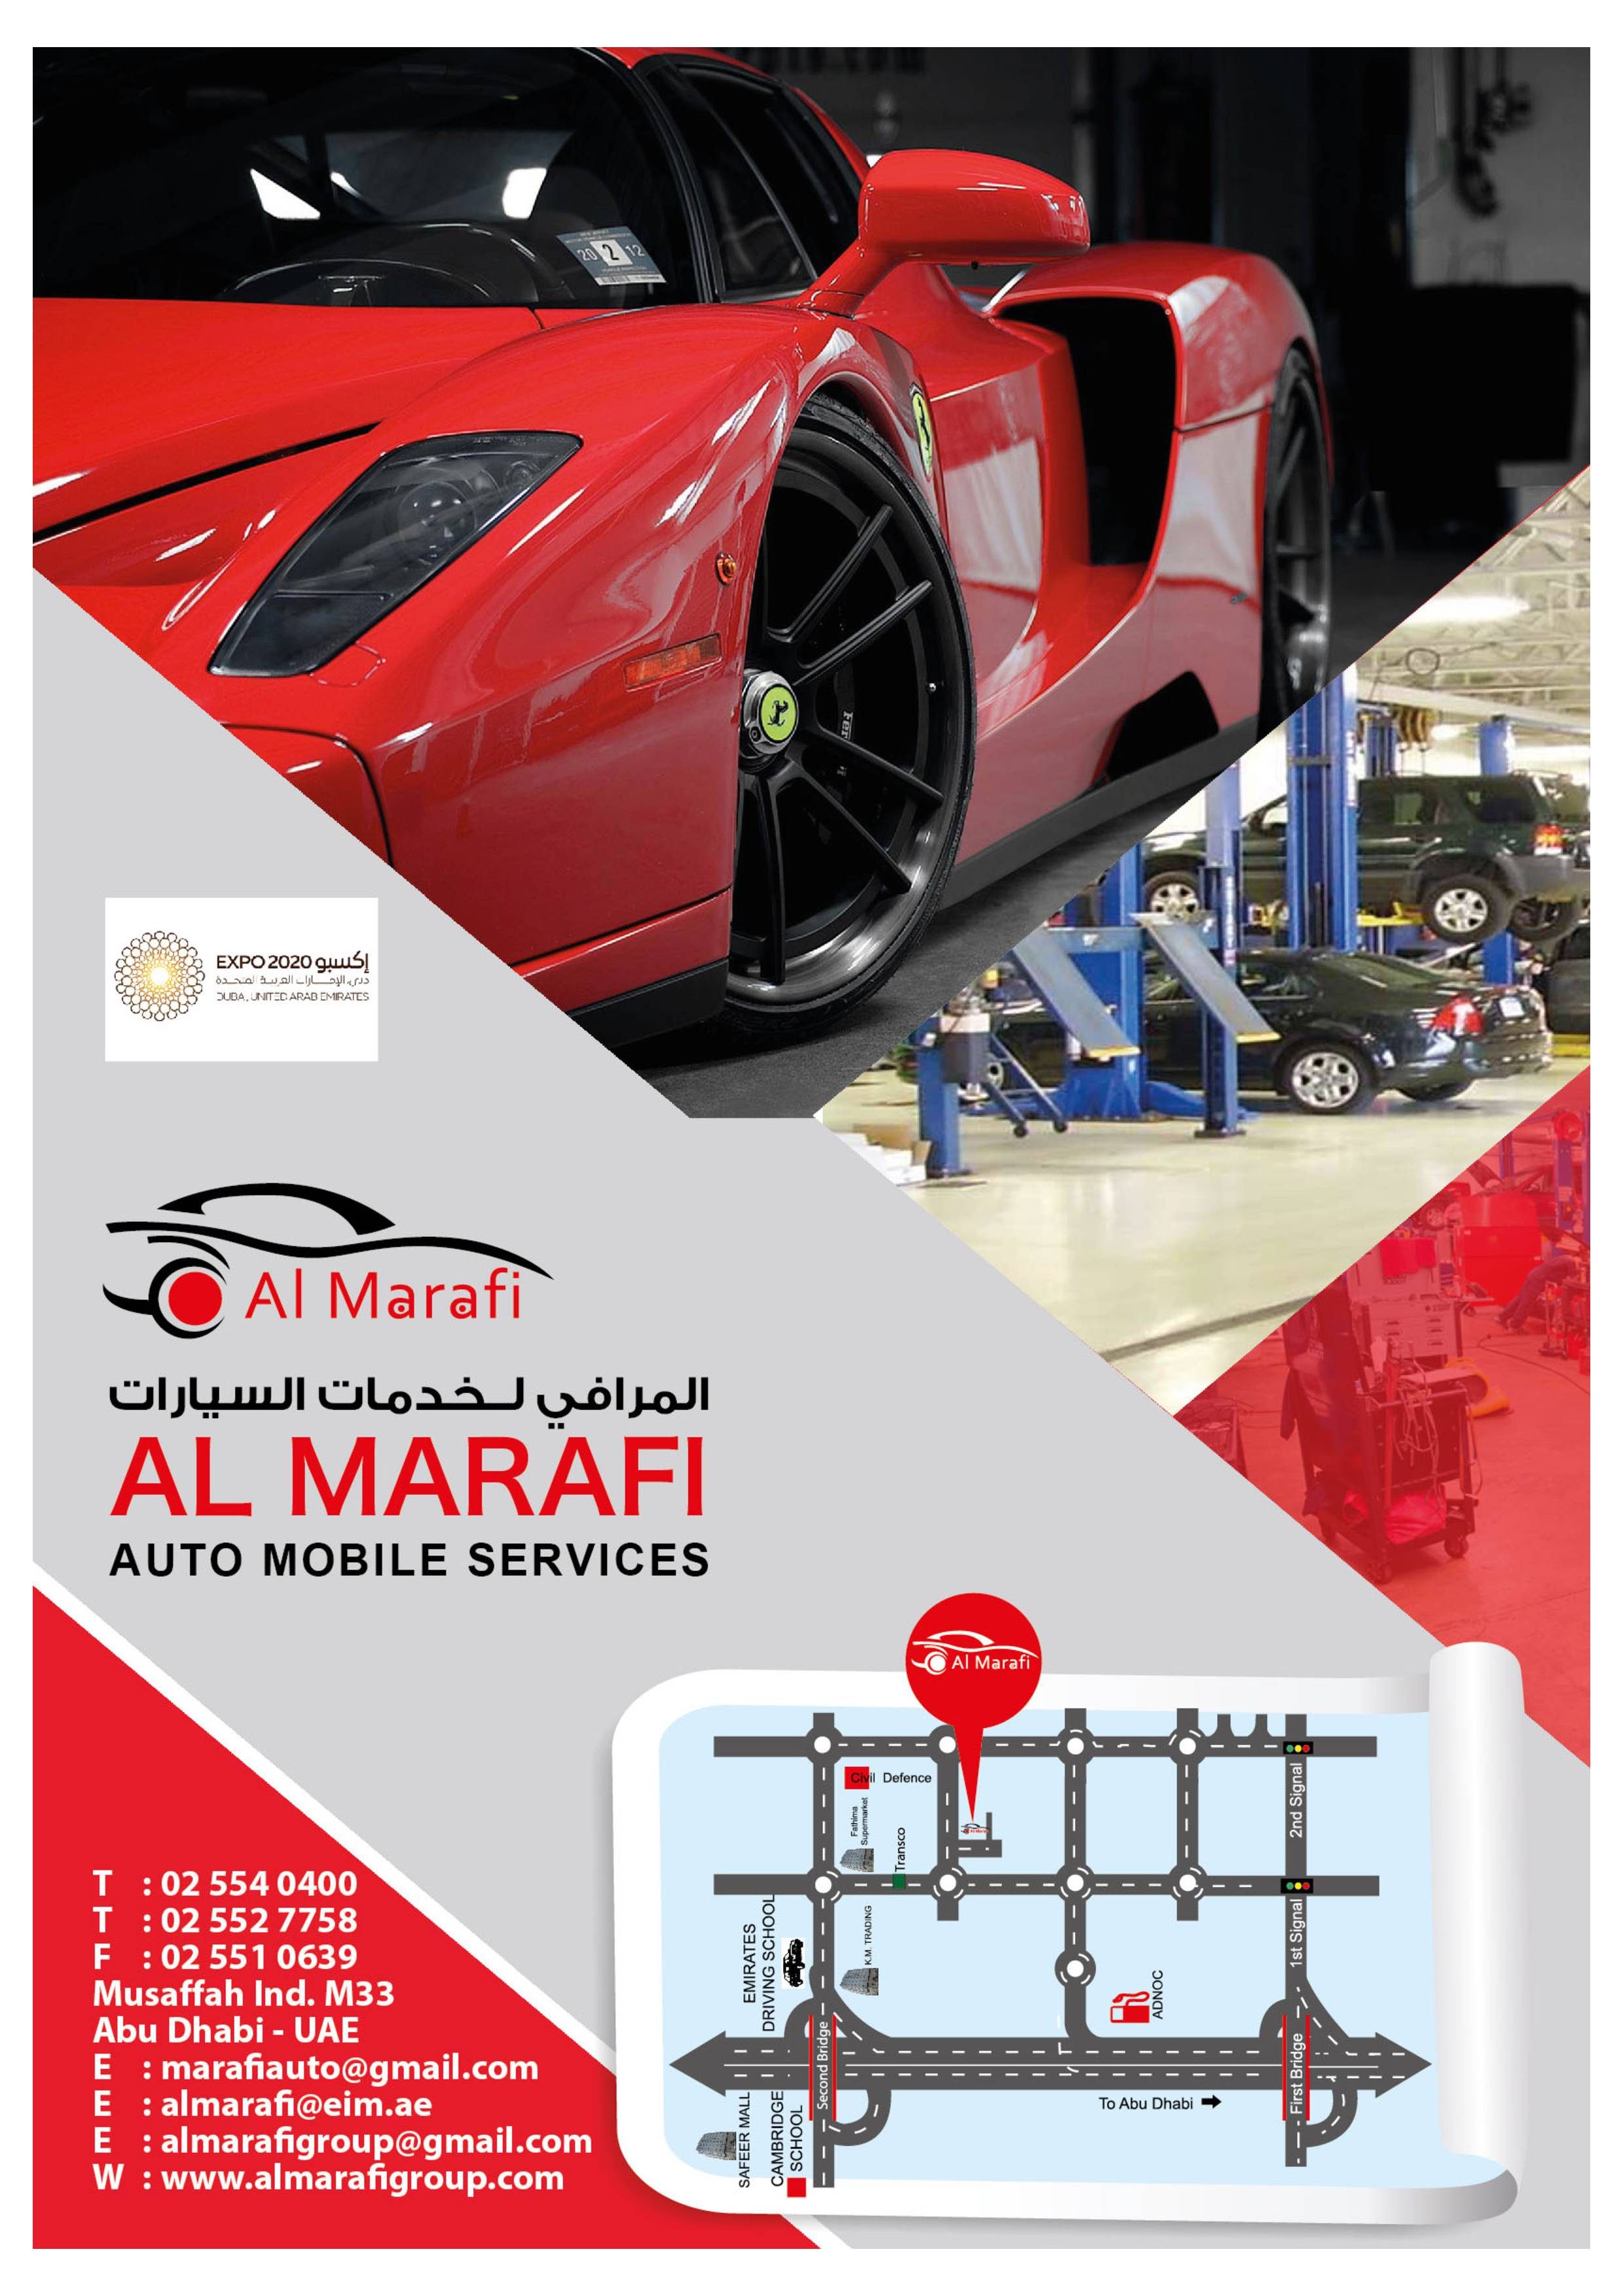 AL MARAFI AUTOMOBILE SERVICES - General Service Workshop - Carnity.com